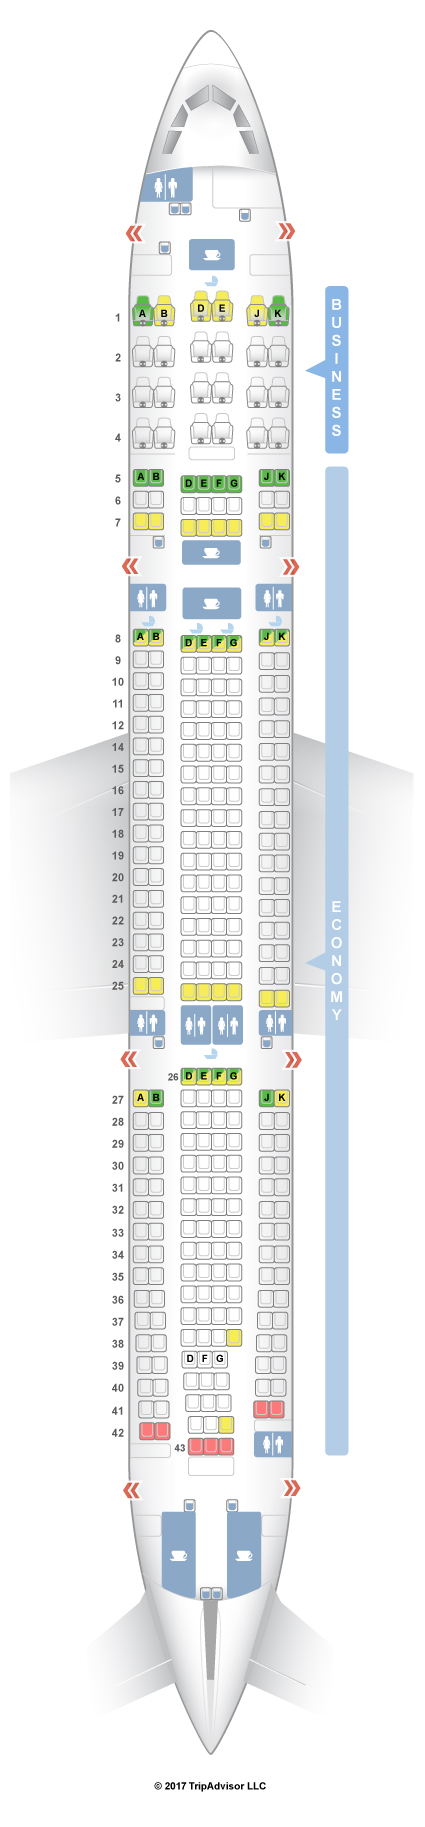 Fiji Airways Fj811 Seating Chart